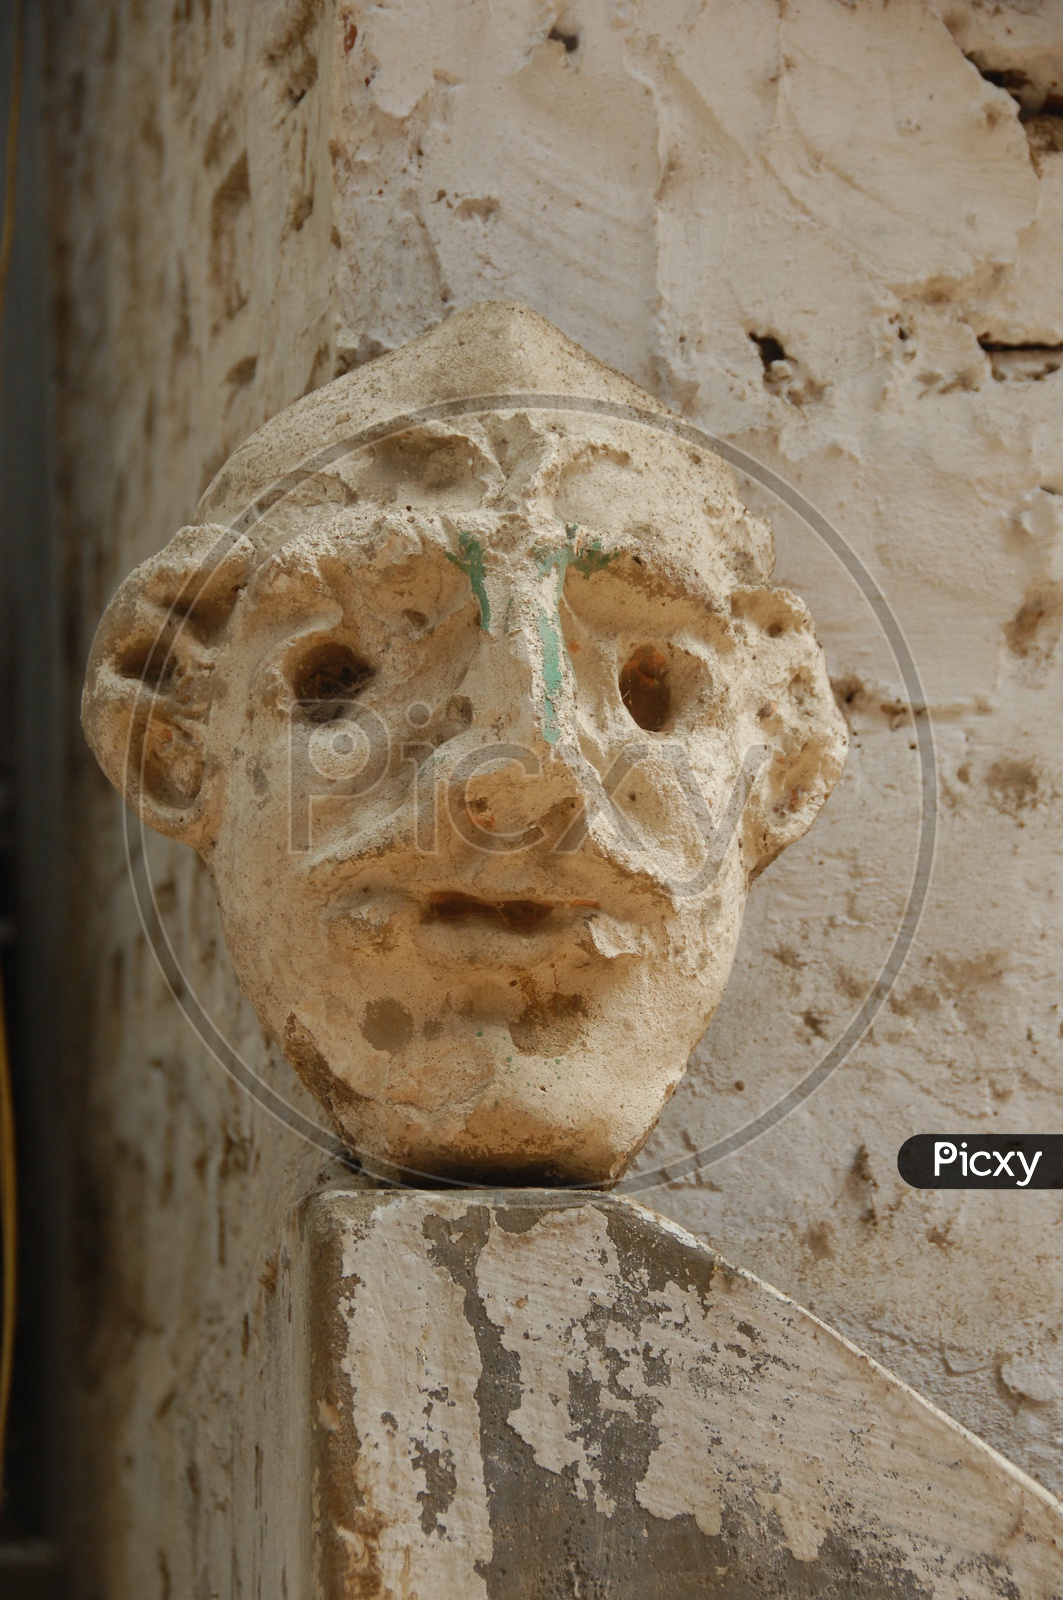 Plaster of Paris subjected facial feature